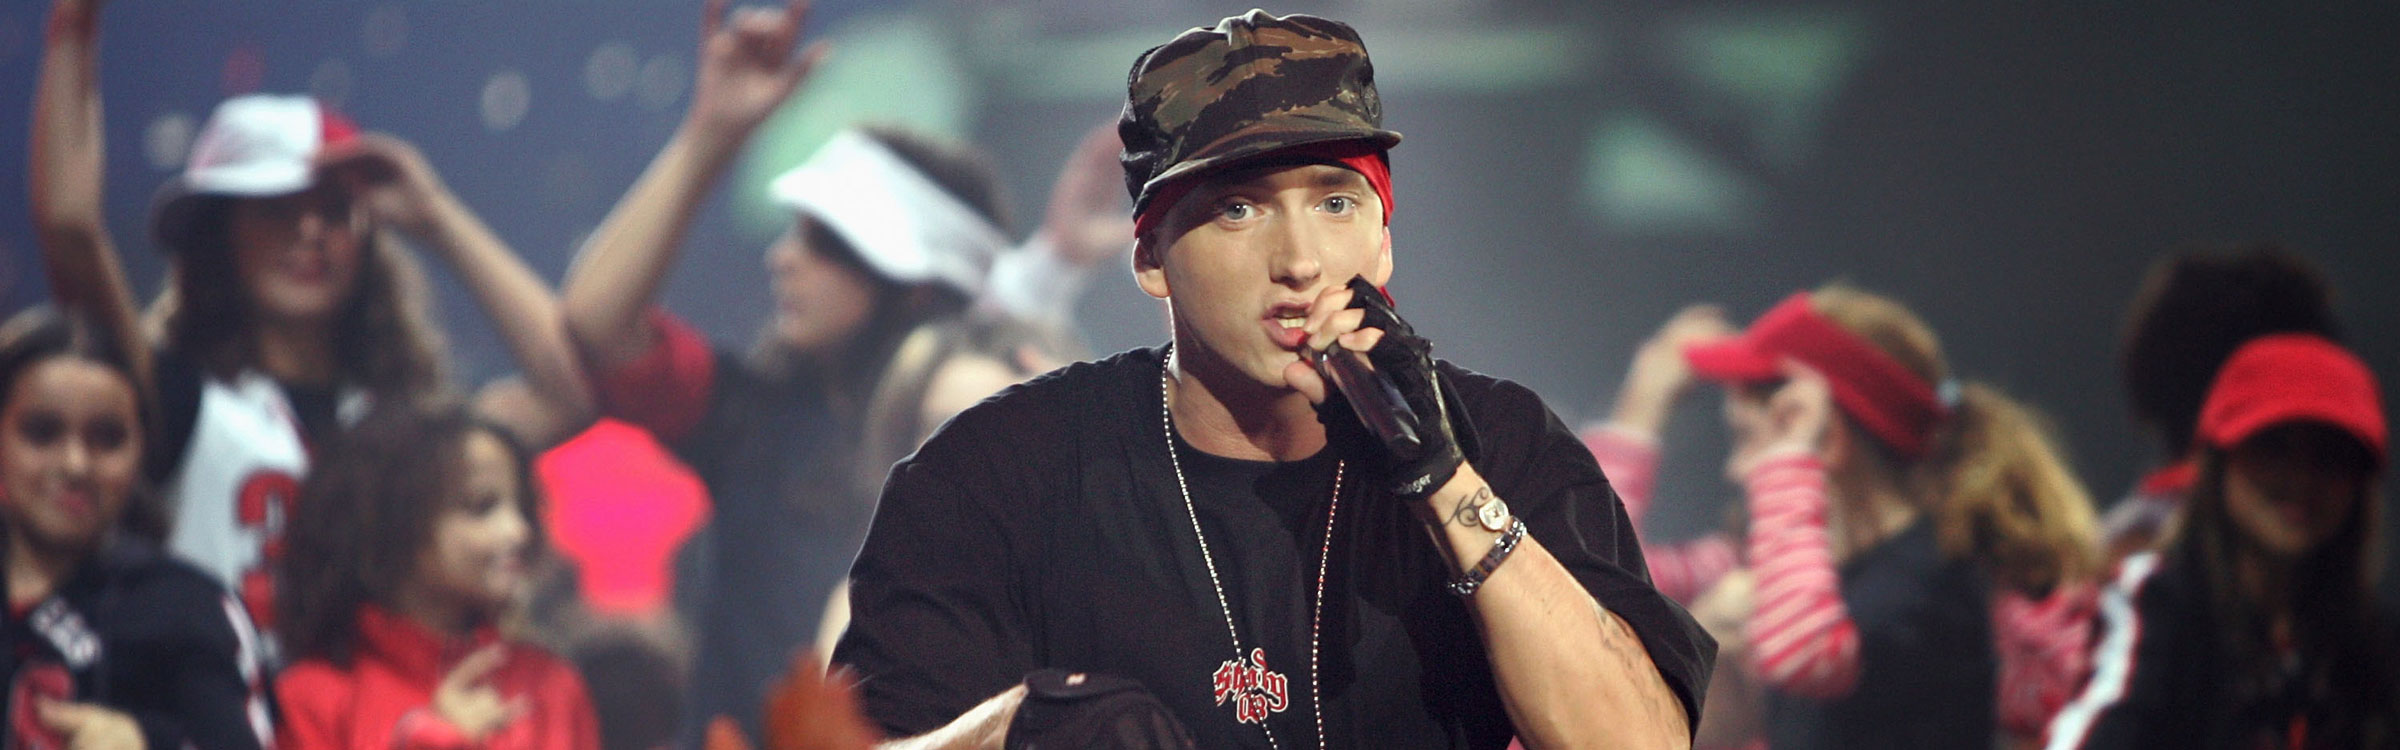 Eminem header